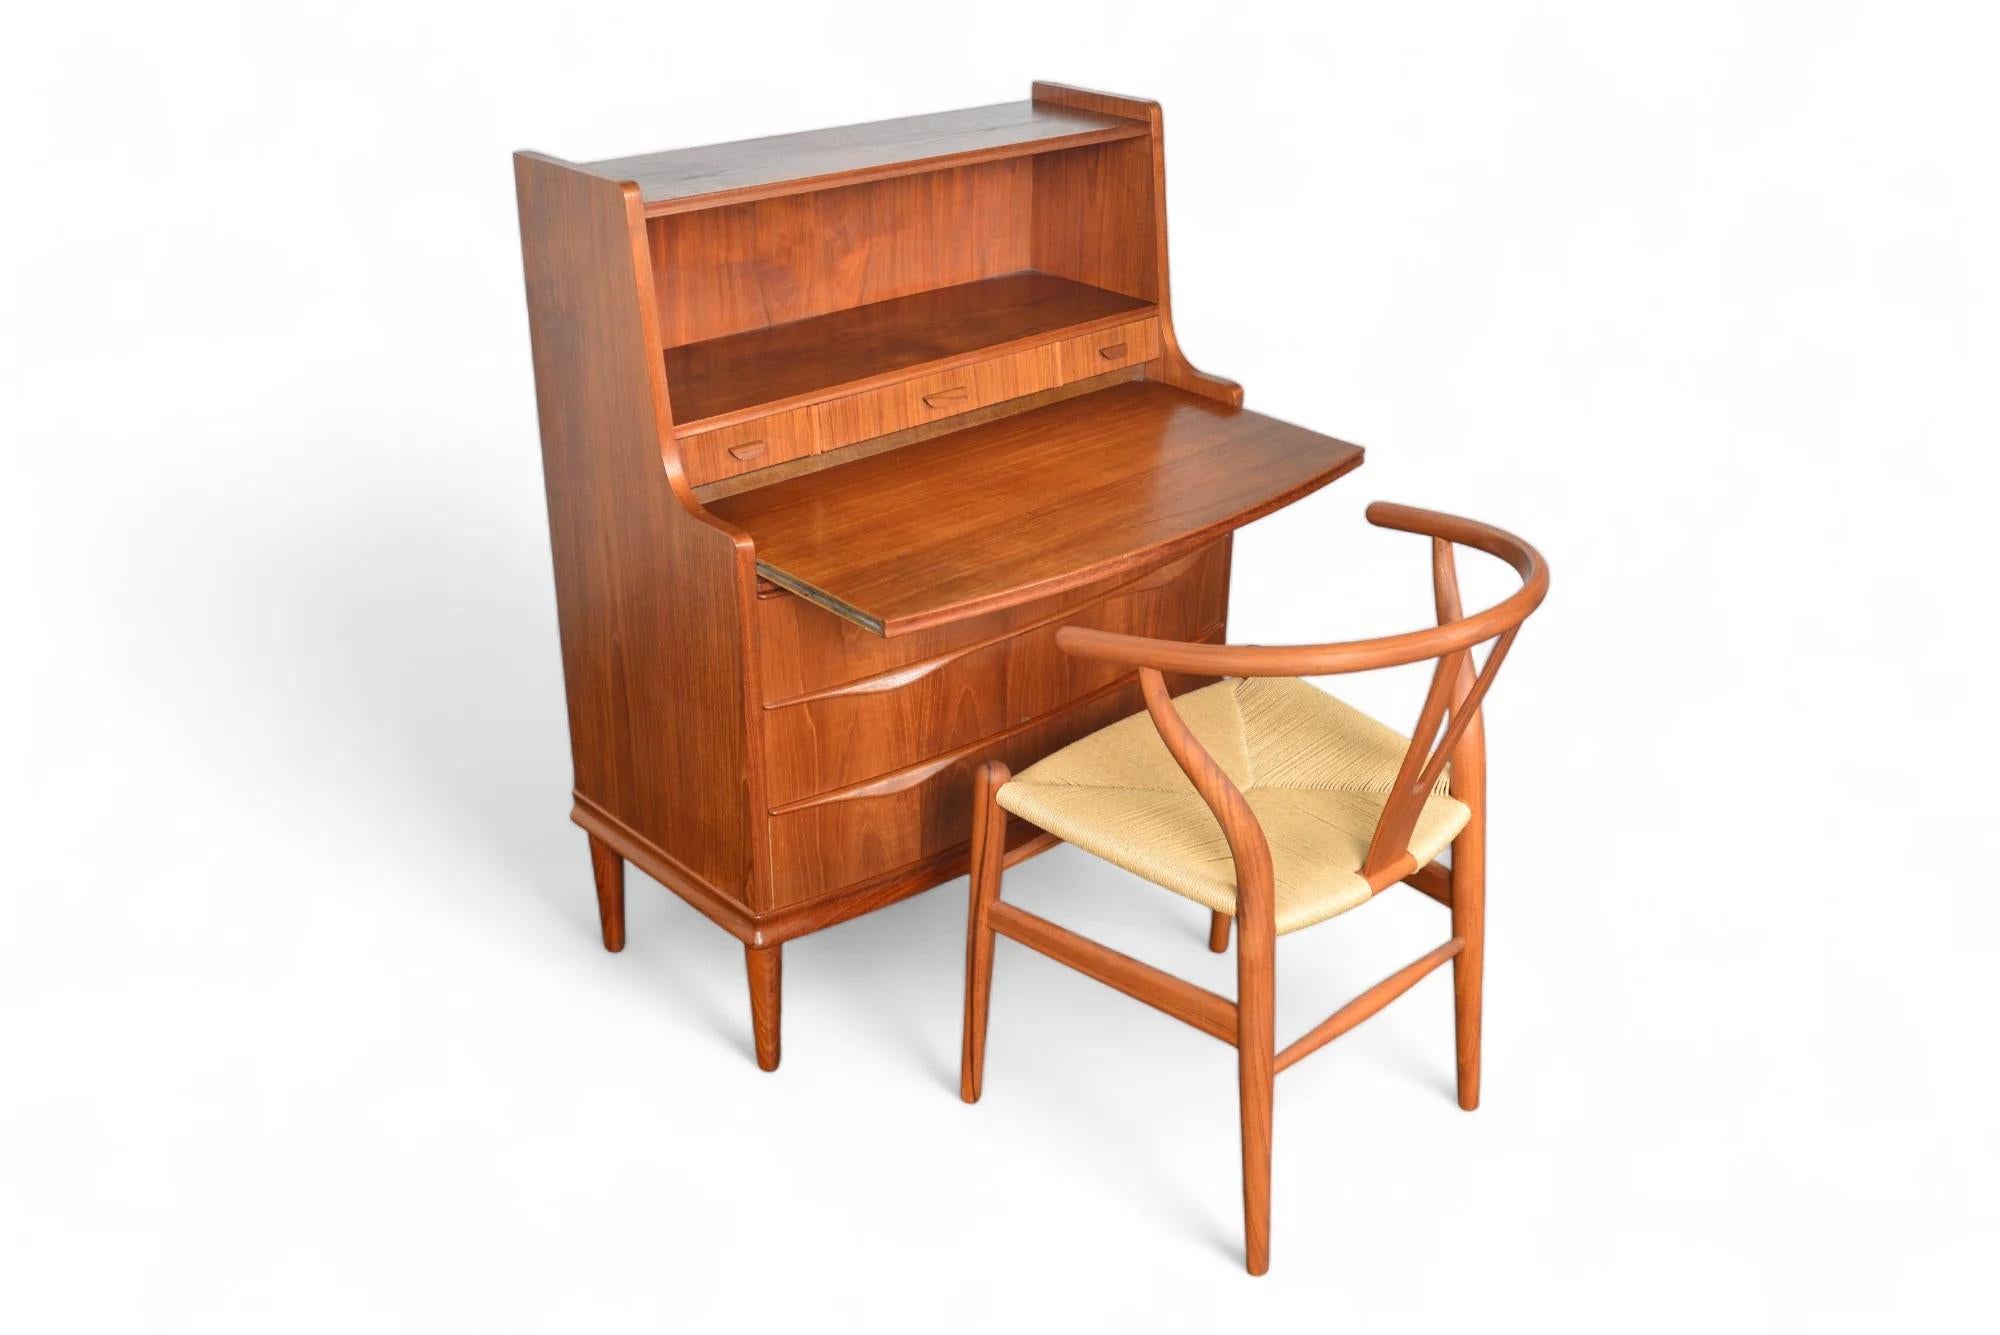 20th Century Danish Modern Bow Front Secretary Desk In Teak For Sale